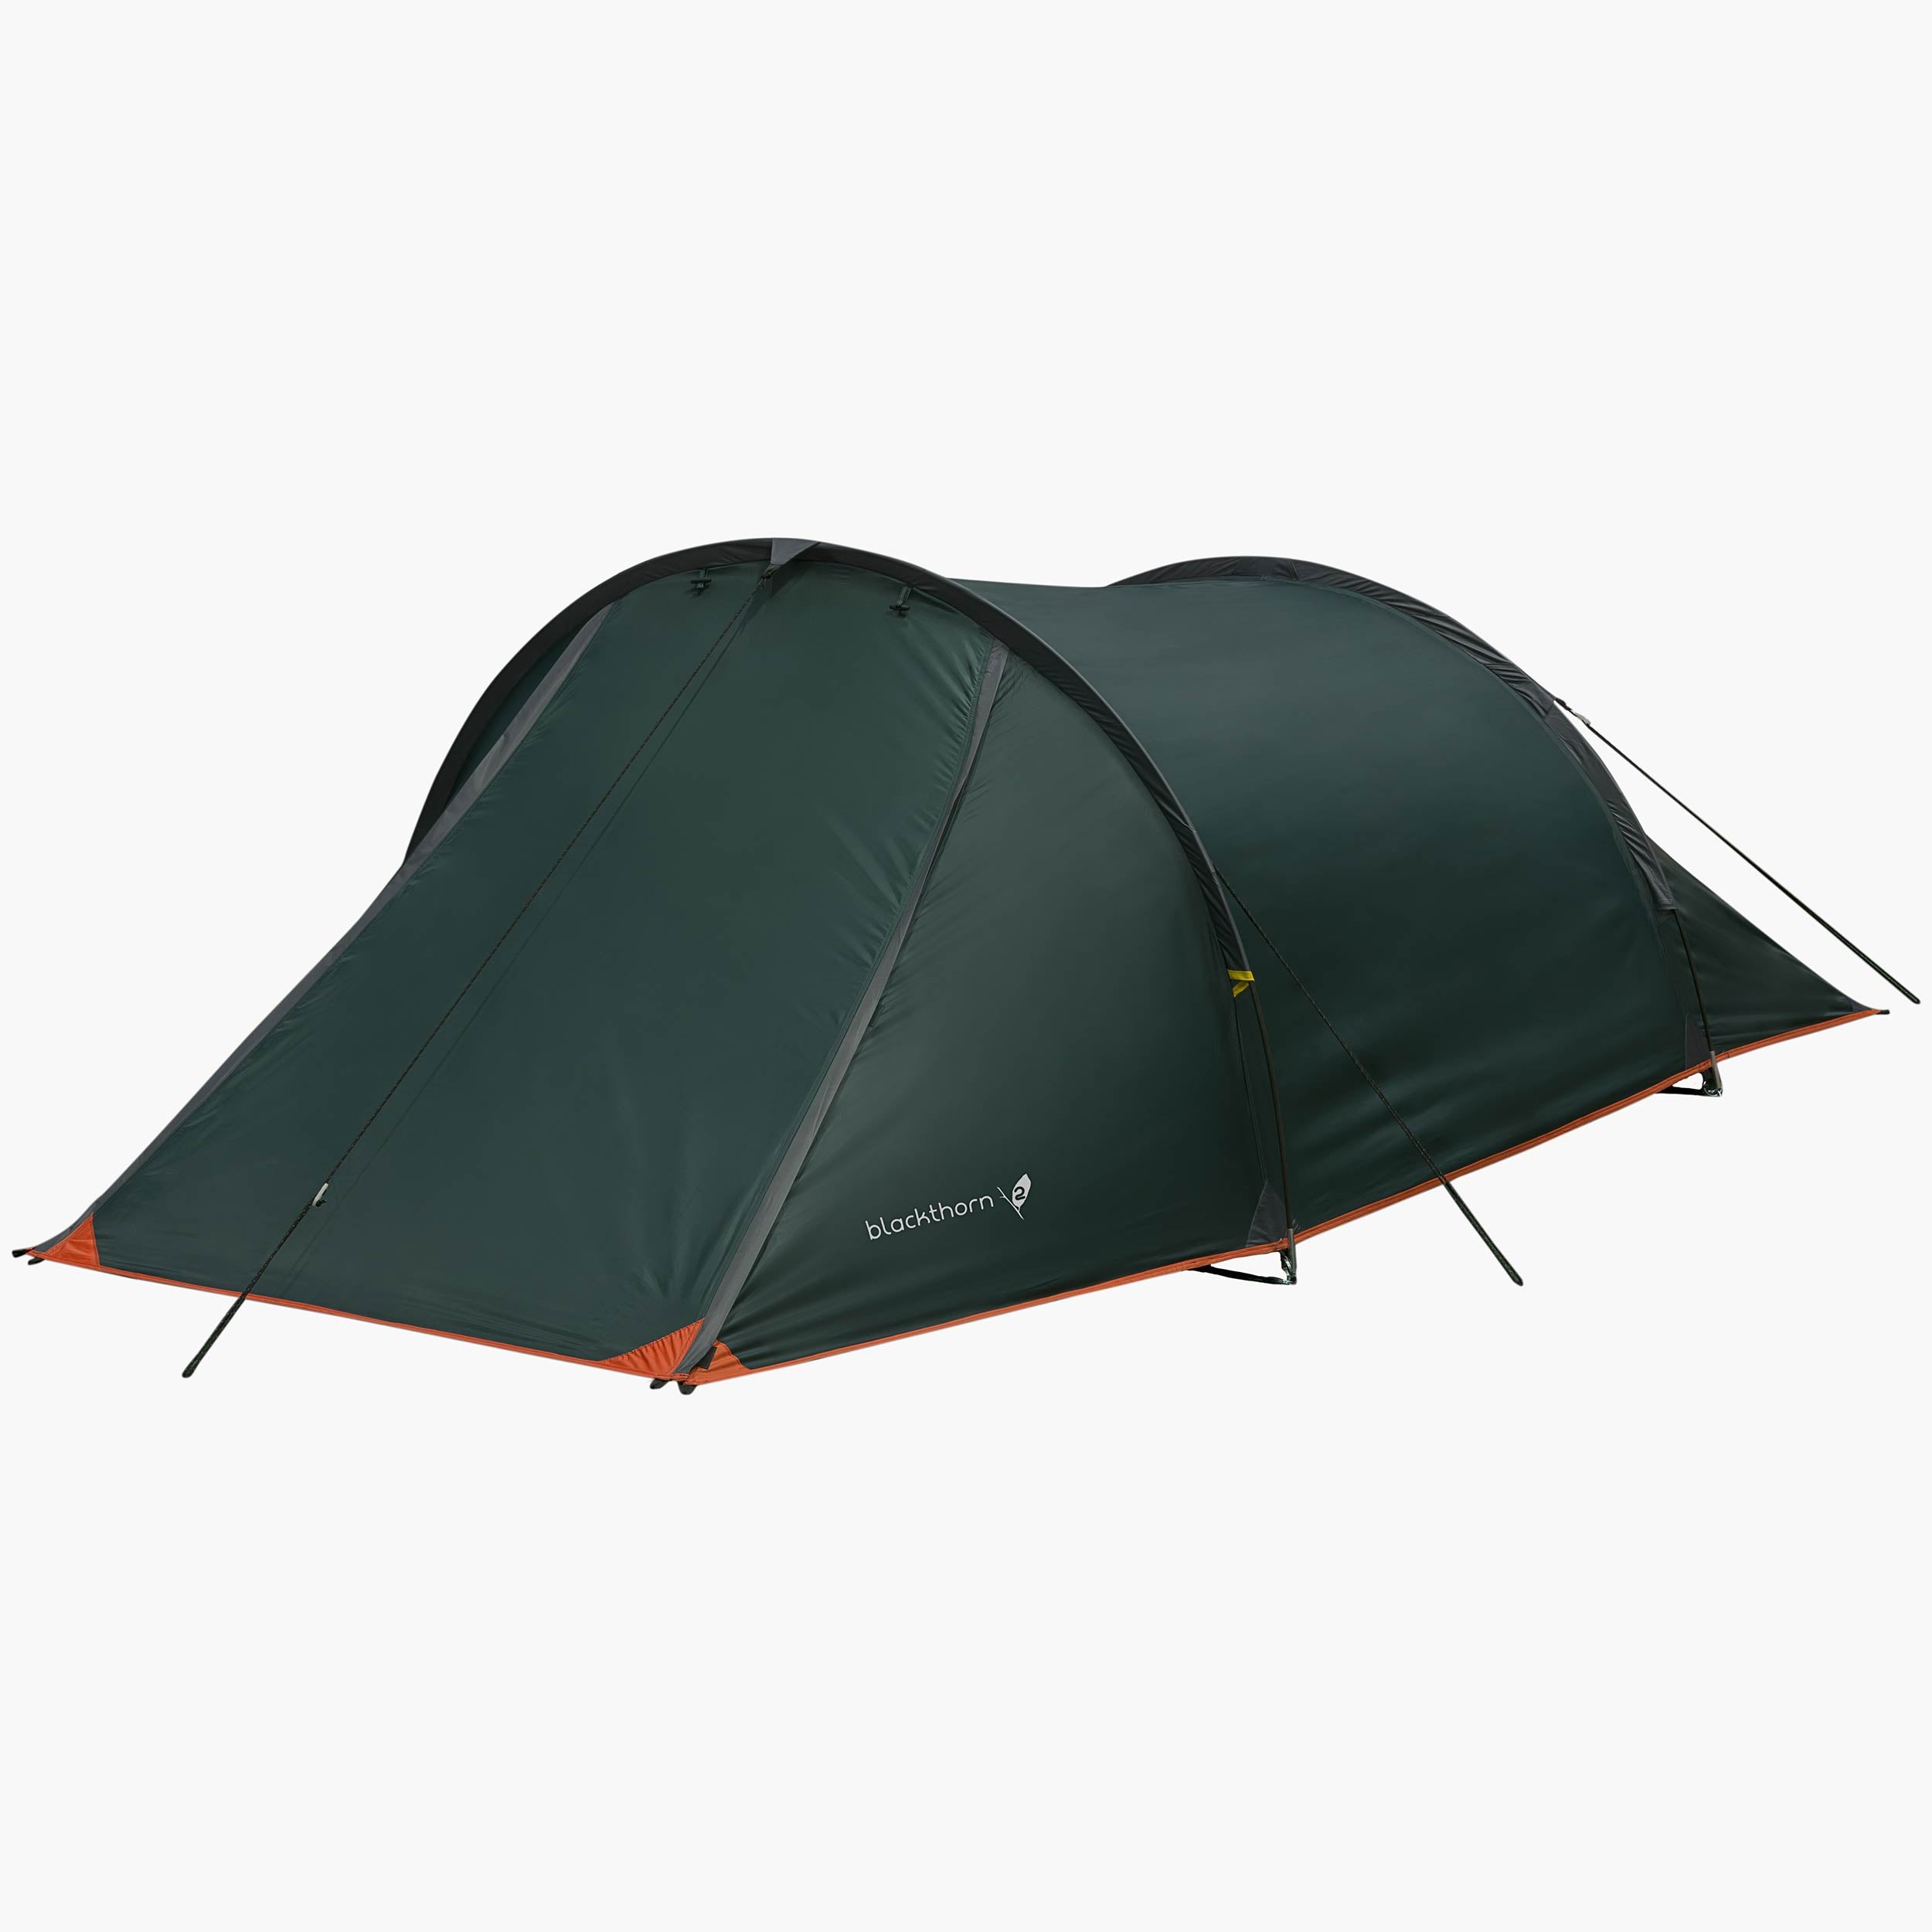 2 Man Tents, Waterproof Camping Tents